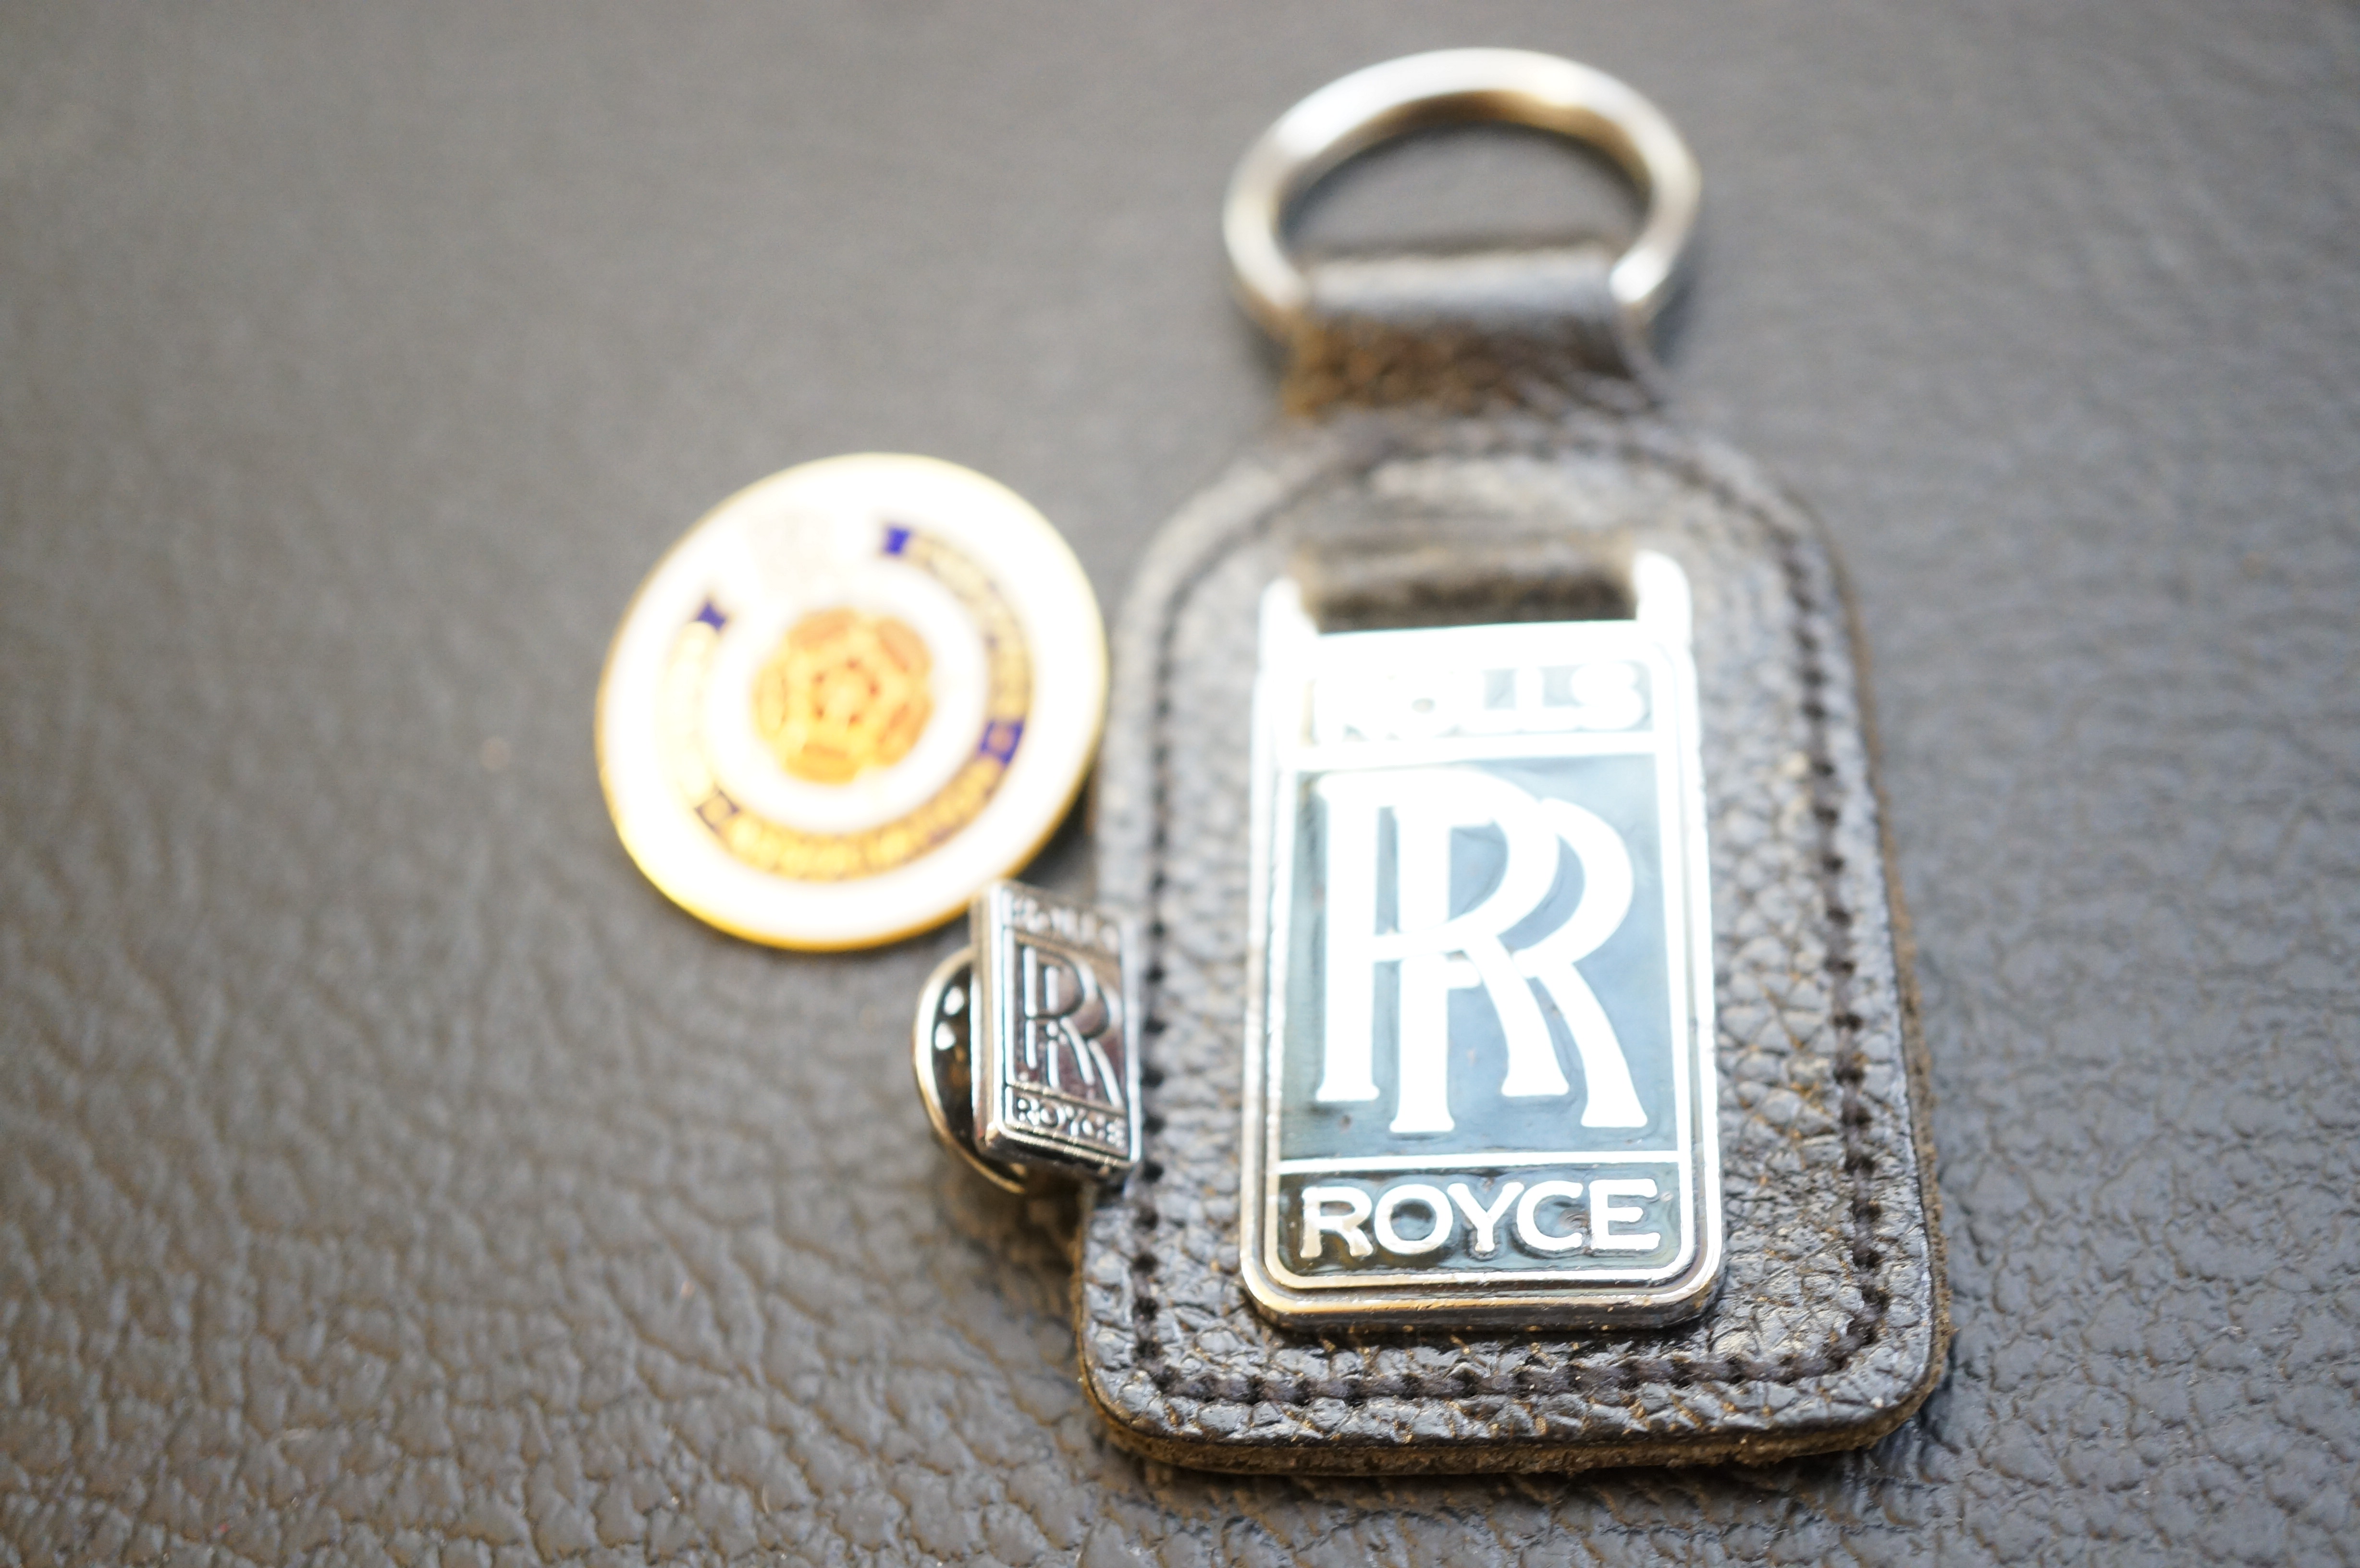 3 Rolls Royce items